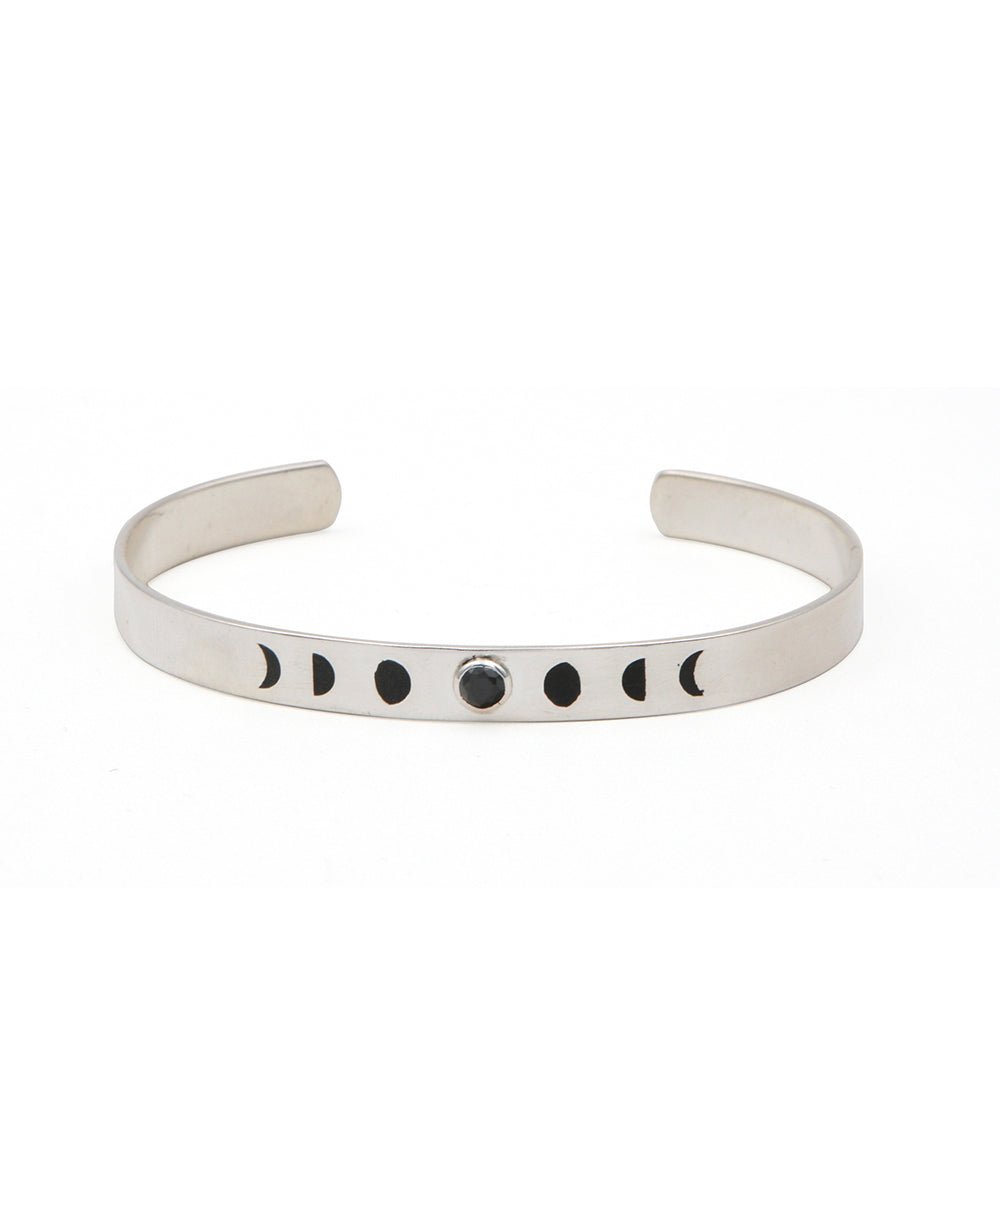 Inspirational Moon Bracelet With Onyx Gemstone - Bracelets